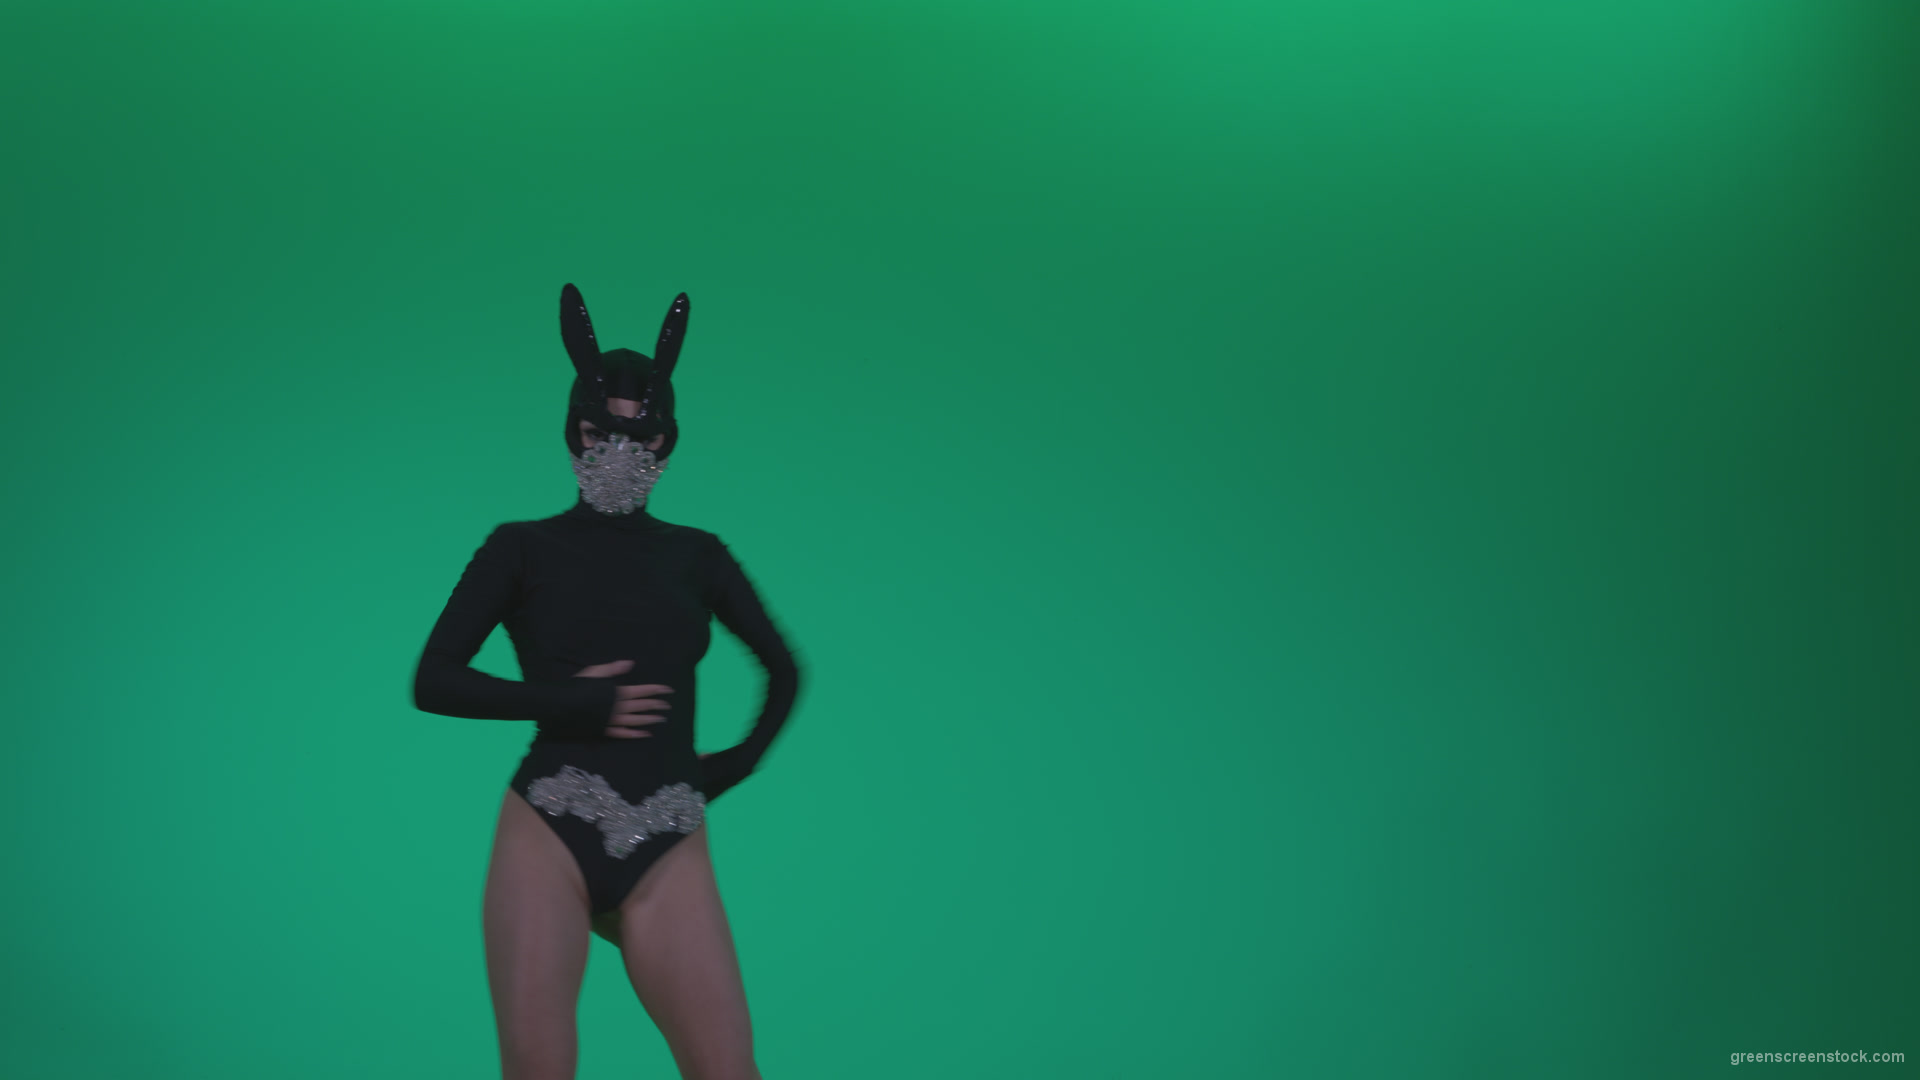 Go-go-Dancer-Black-Rabbit-u13-Green-Screen-Video-Footage_001 Green Screen Stock